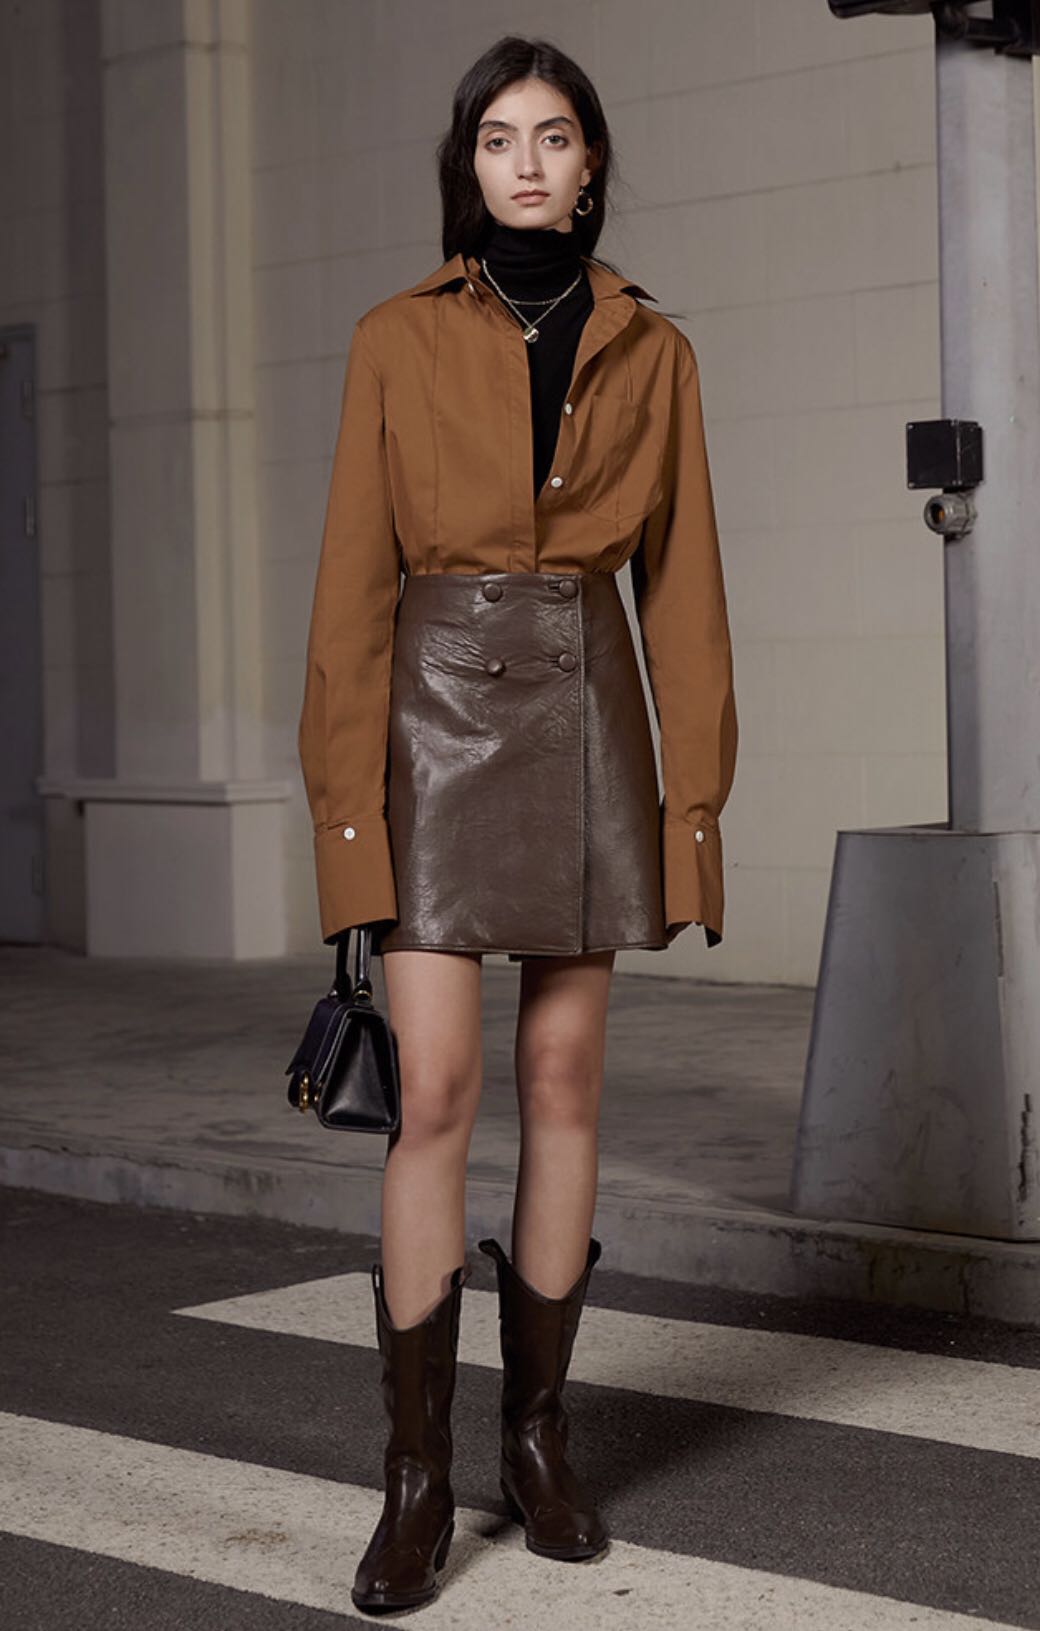 Tahnee Faux Leather Skirt